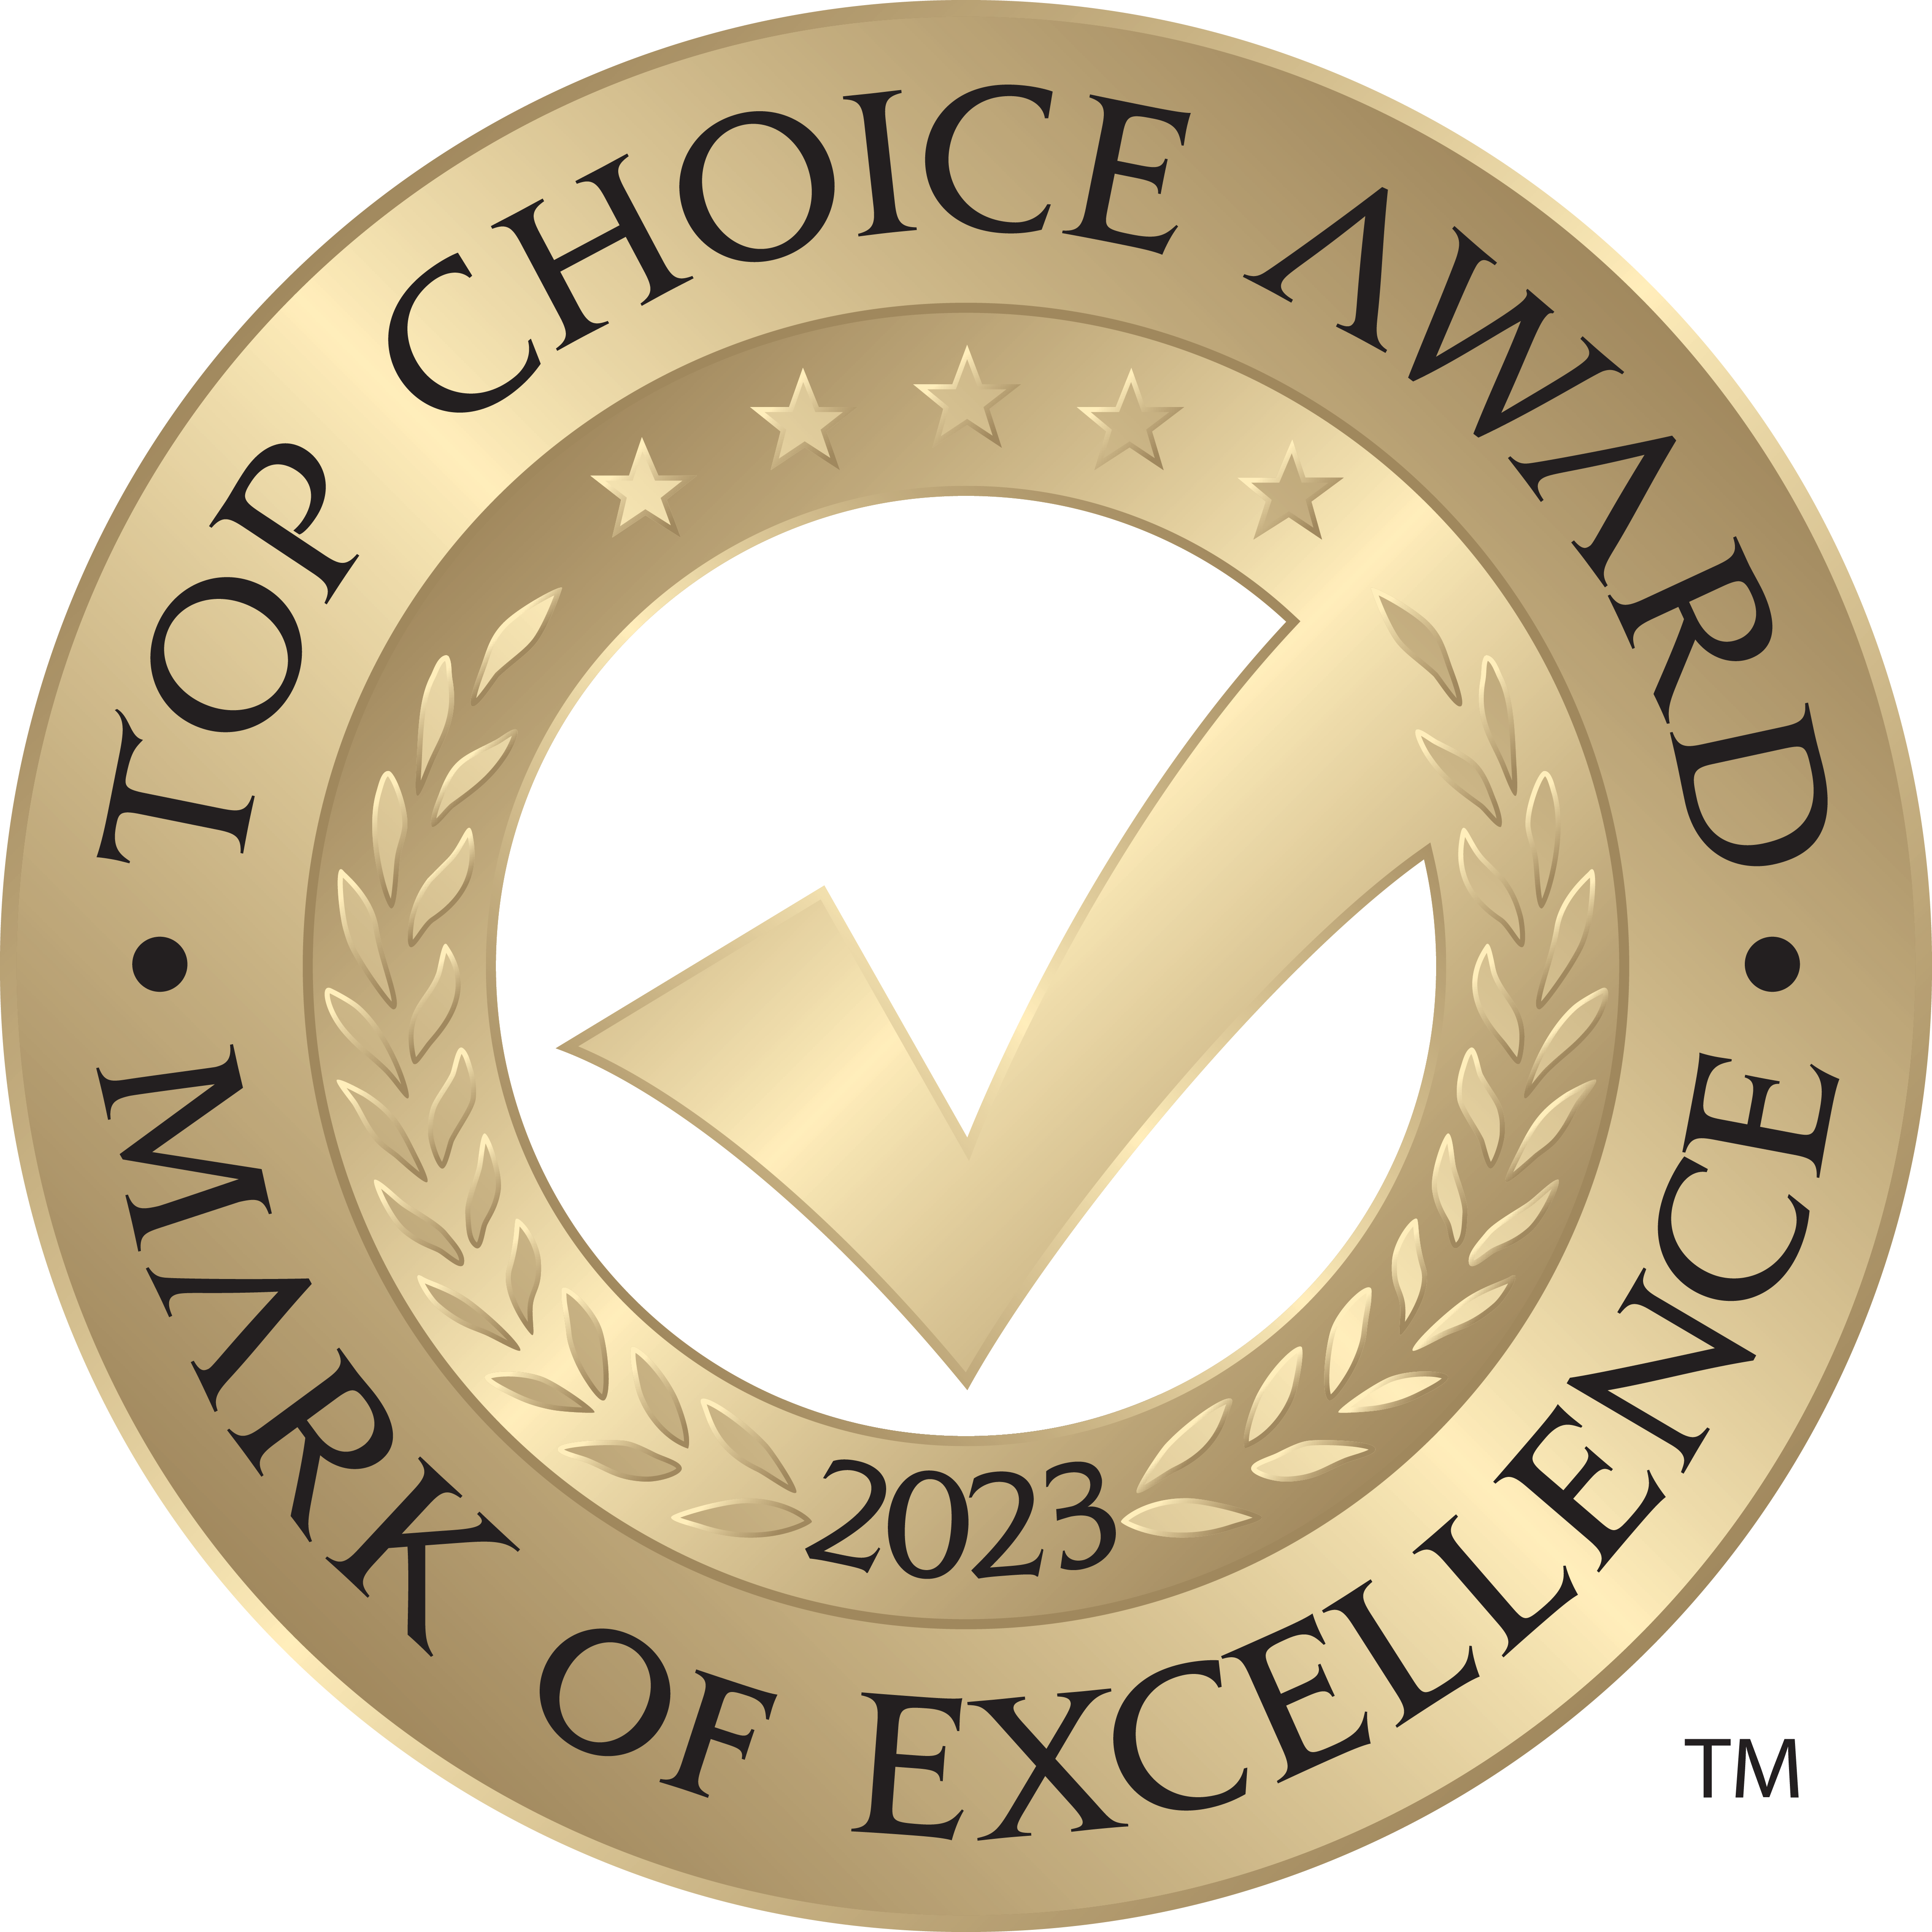 Top choice award logo 2023